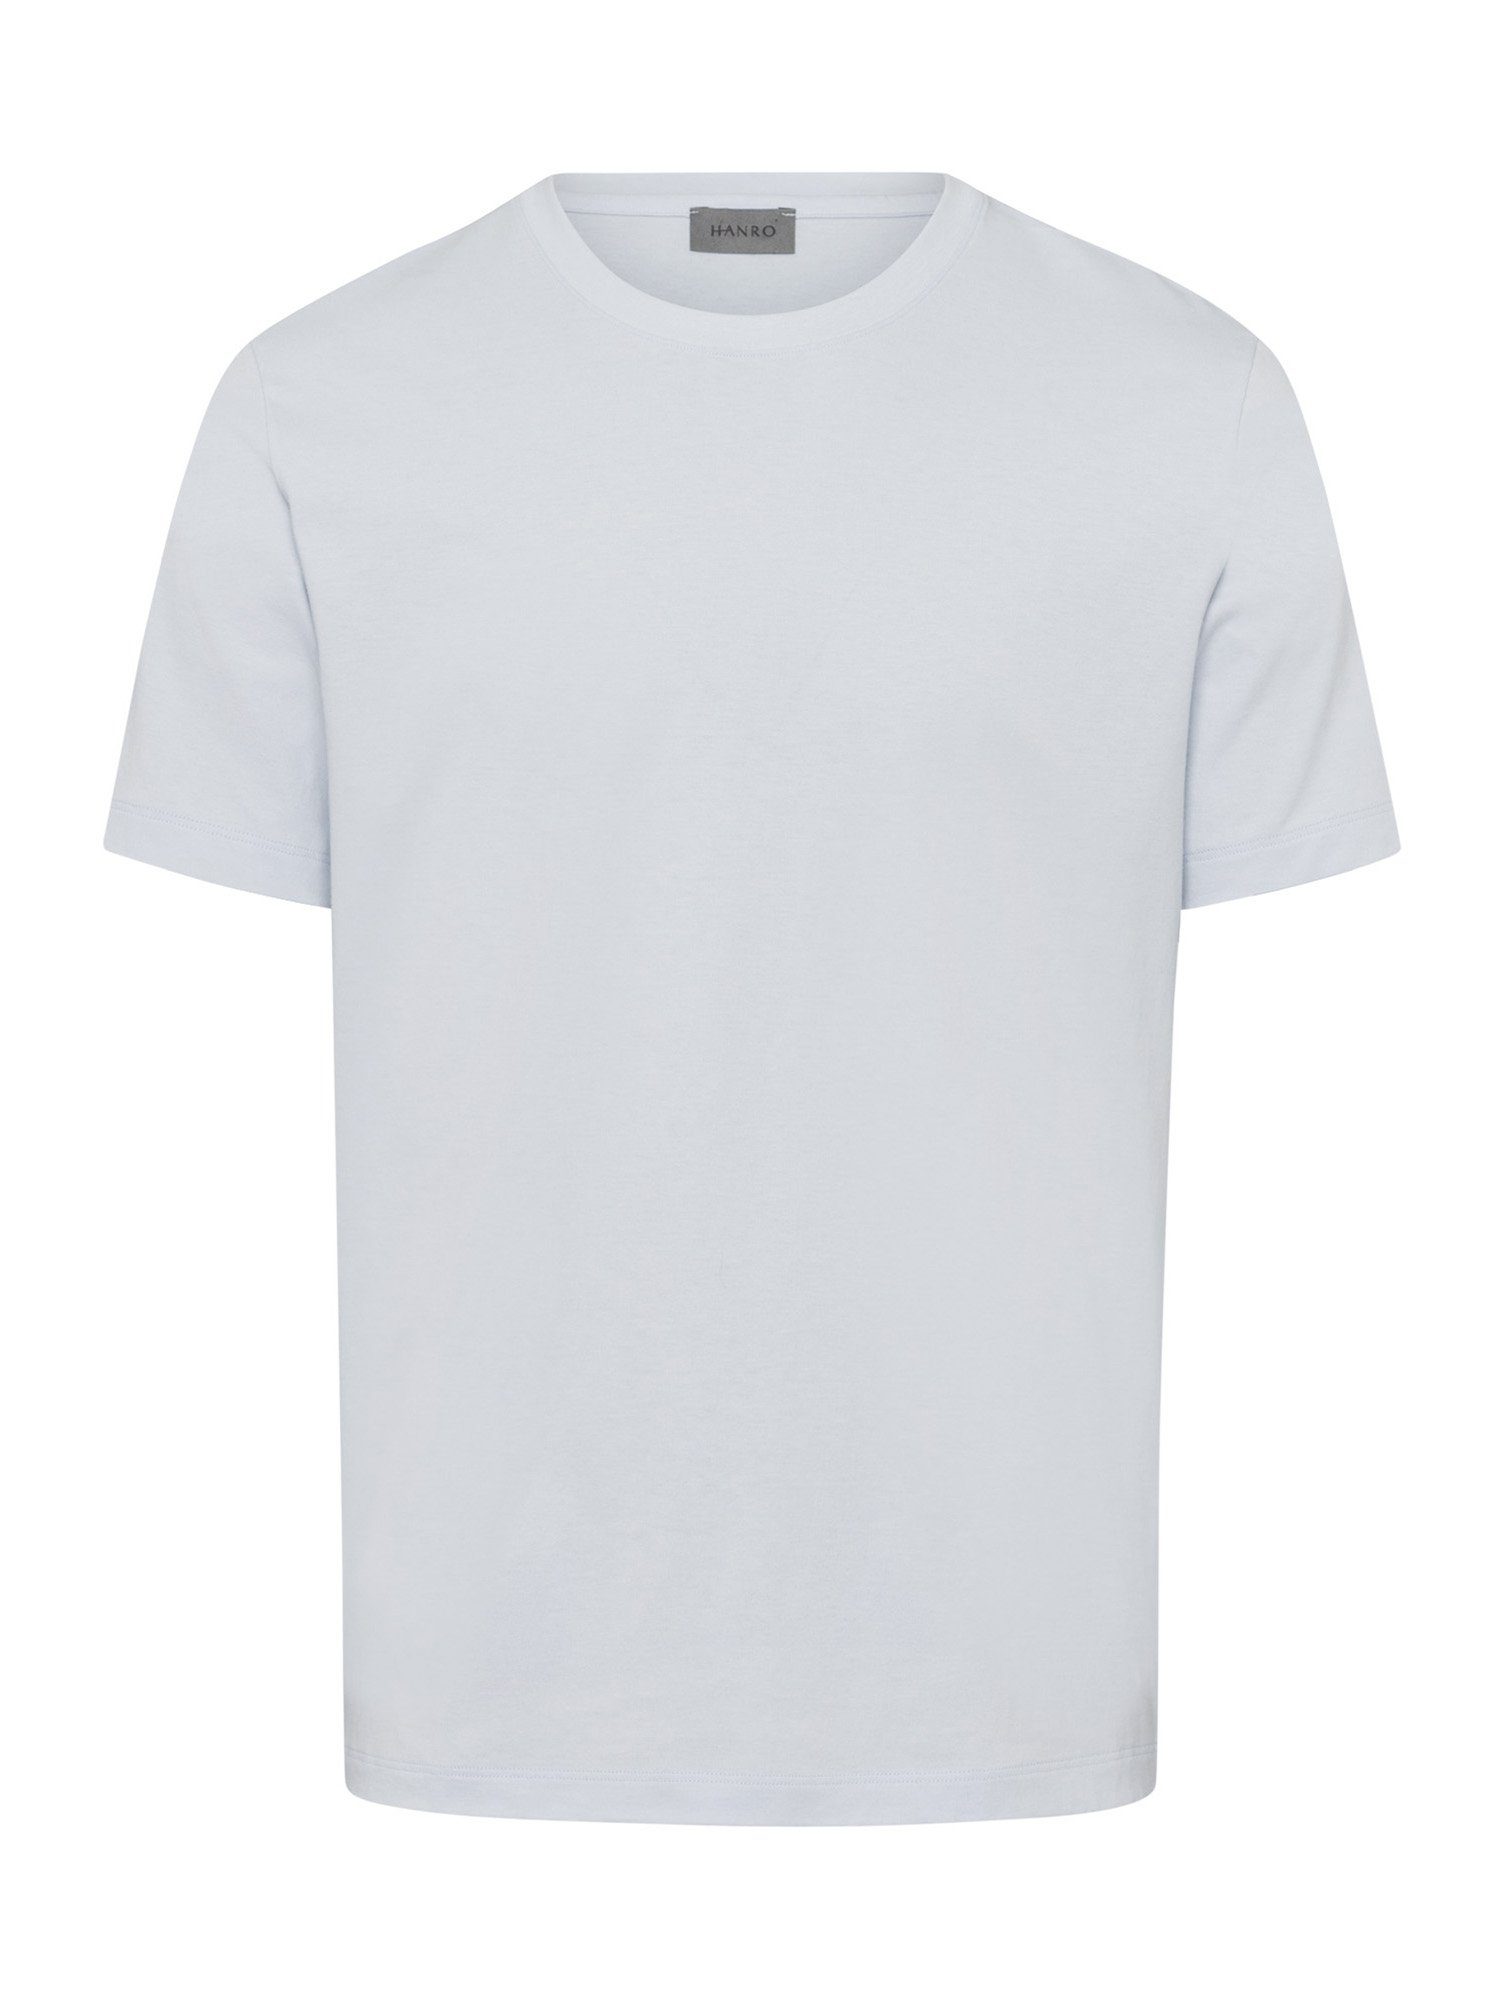 Hanro T-Shirt Living Shirts mist